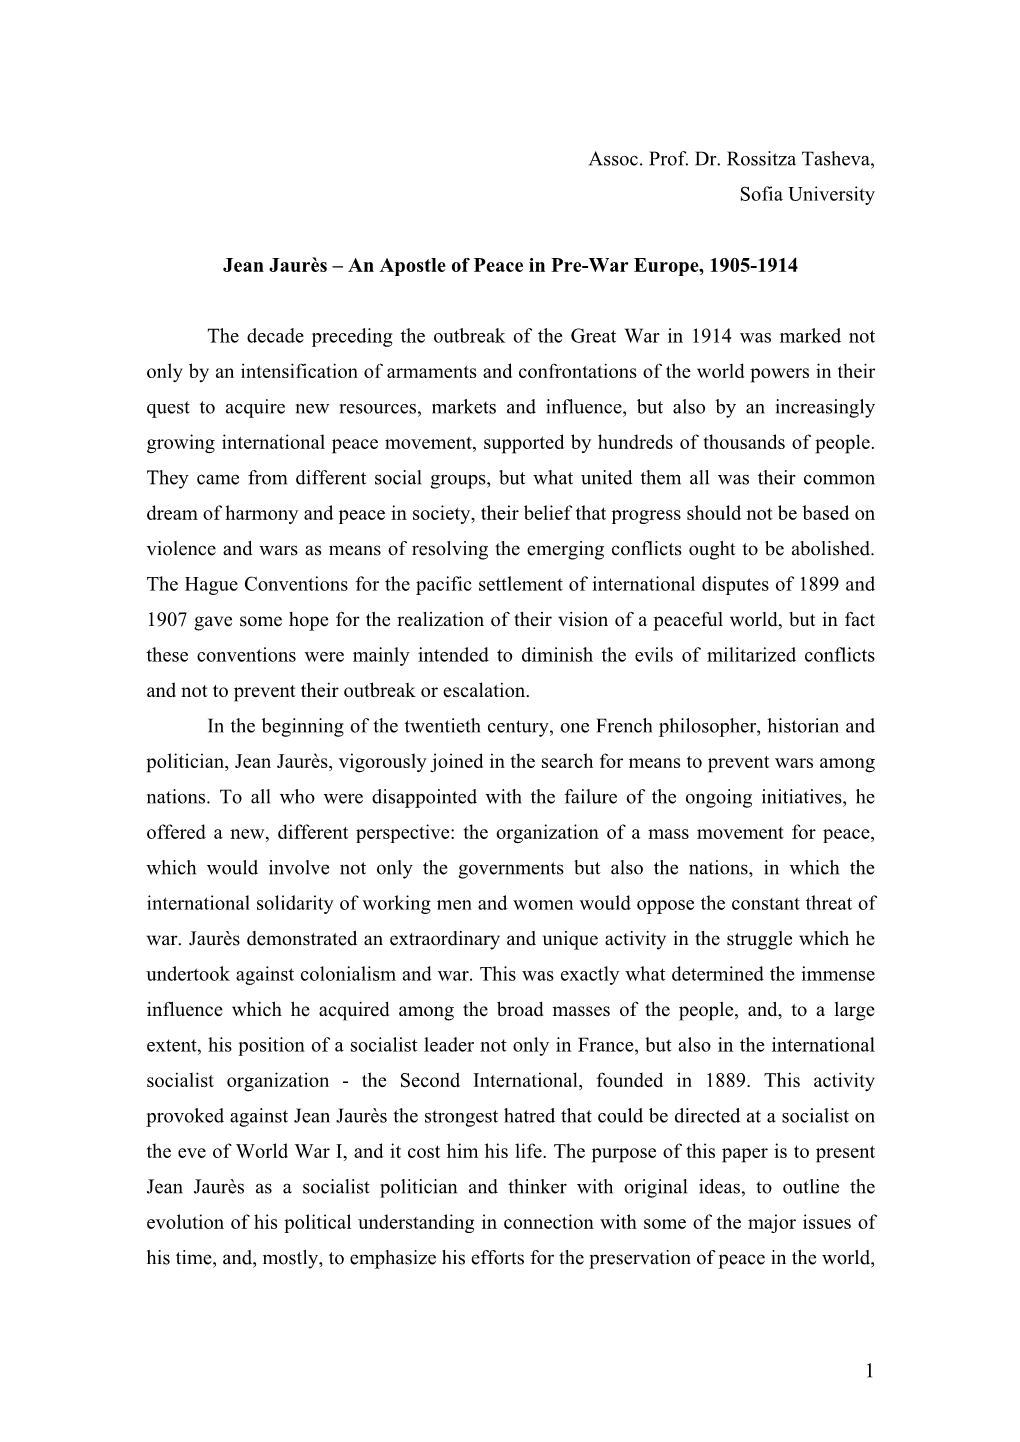 Jean Jaurès – an Apostle of Peace in Pre-War Europe, 1905-1914